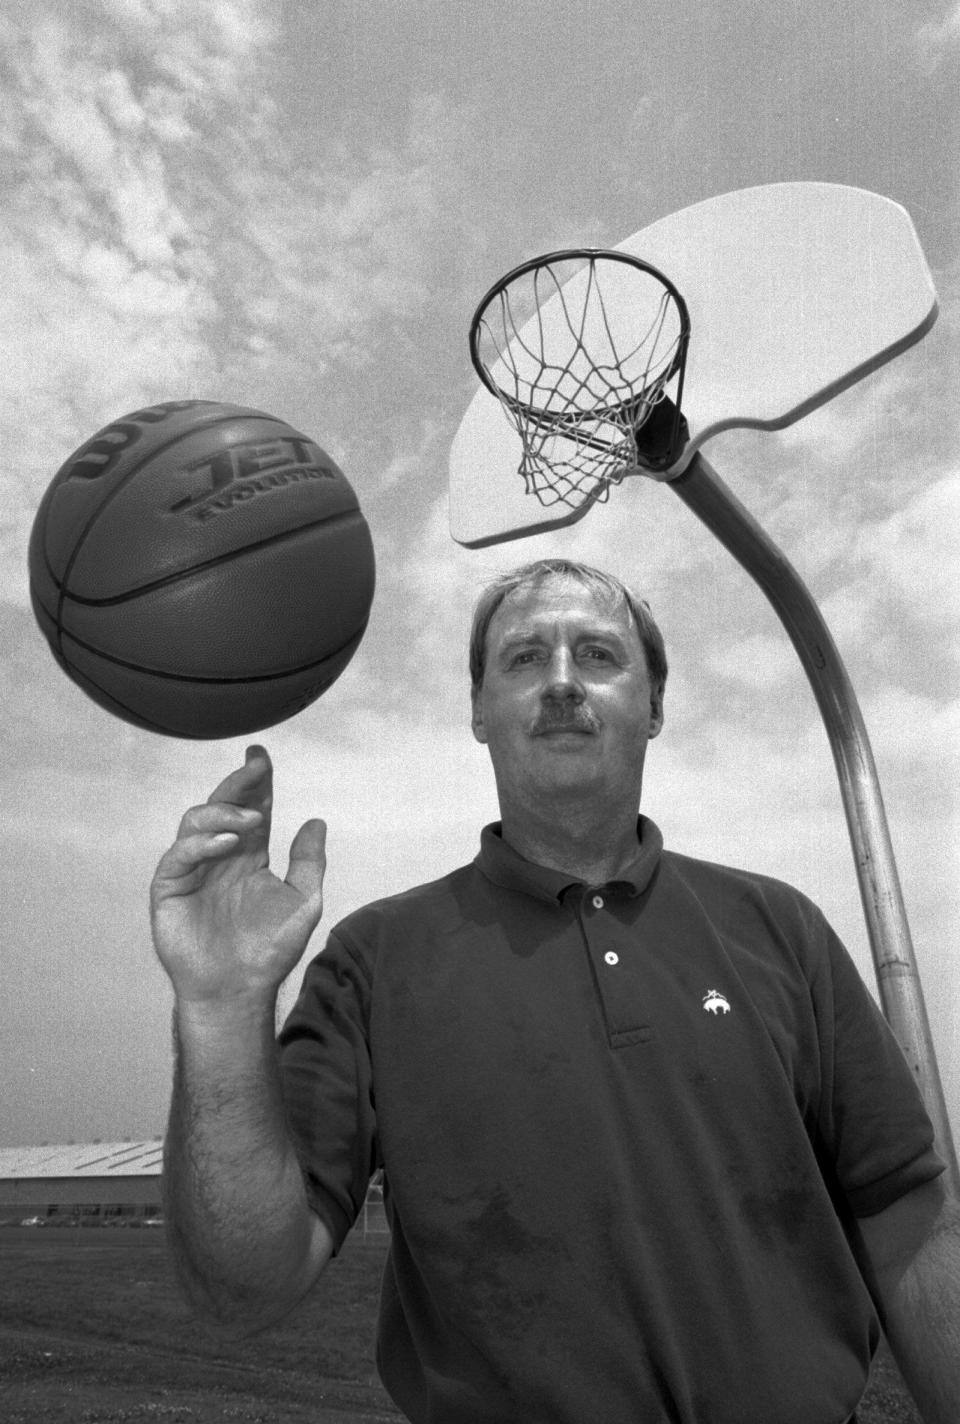 Burlington Free Press sportswriter Andy Gardiner, shown in 1997.